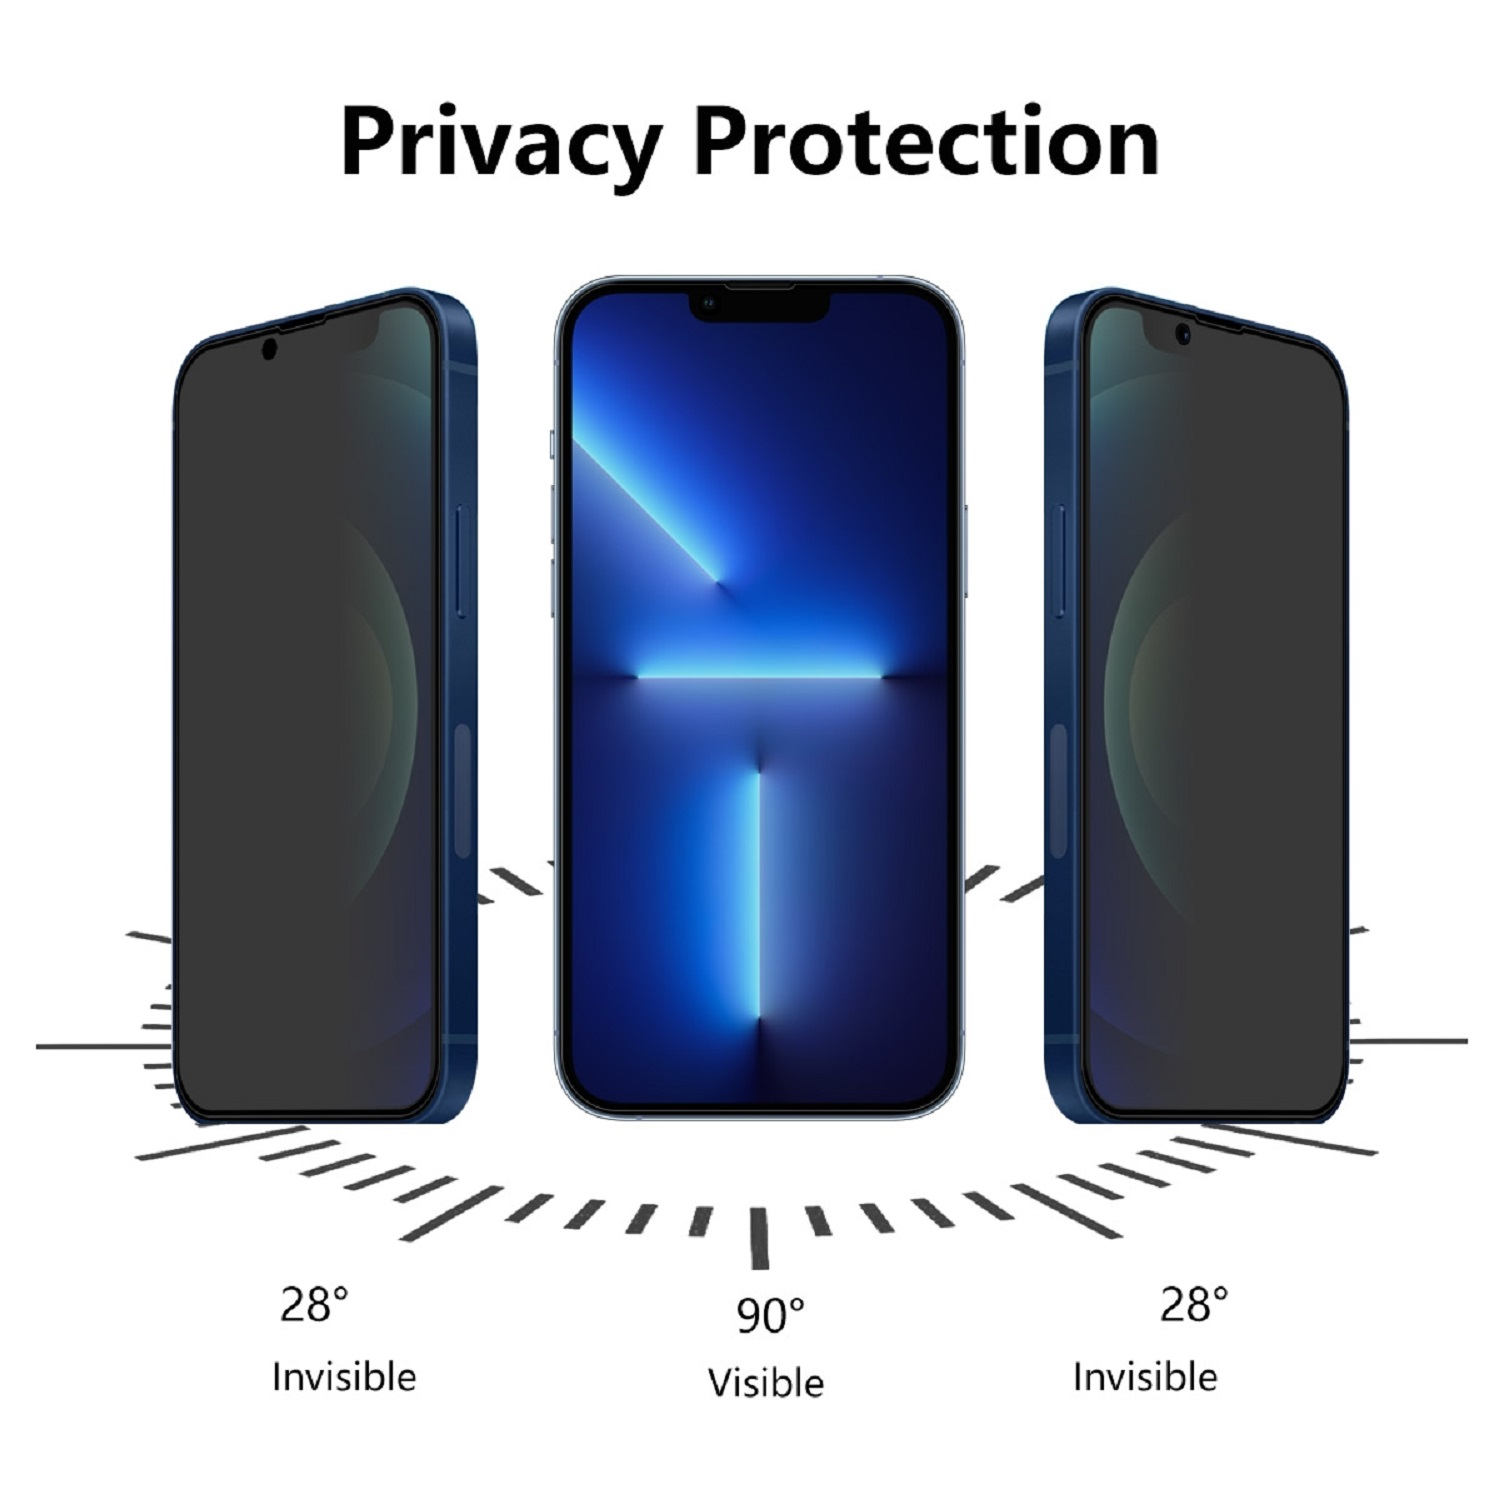 PROTECTORKING 2x FULL COVER Pro iPhone Displayschutzfolie(für Schutzglas ANTI-SPY 13 Apple Max) 9H Privacy